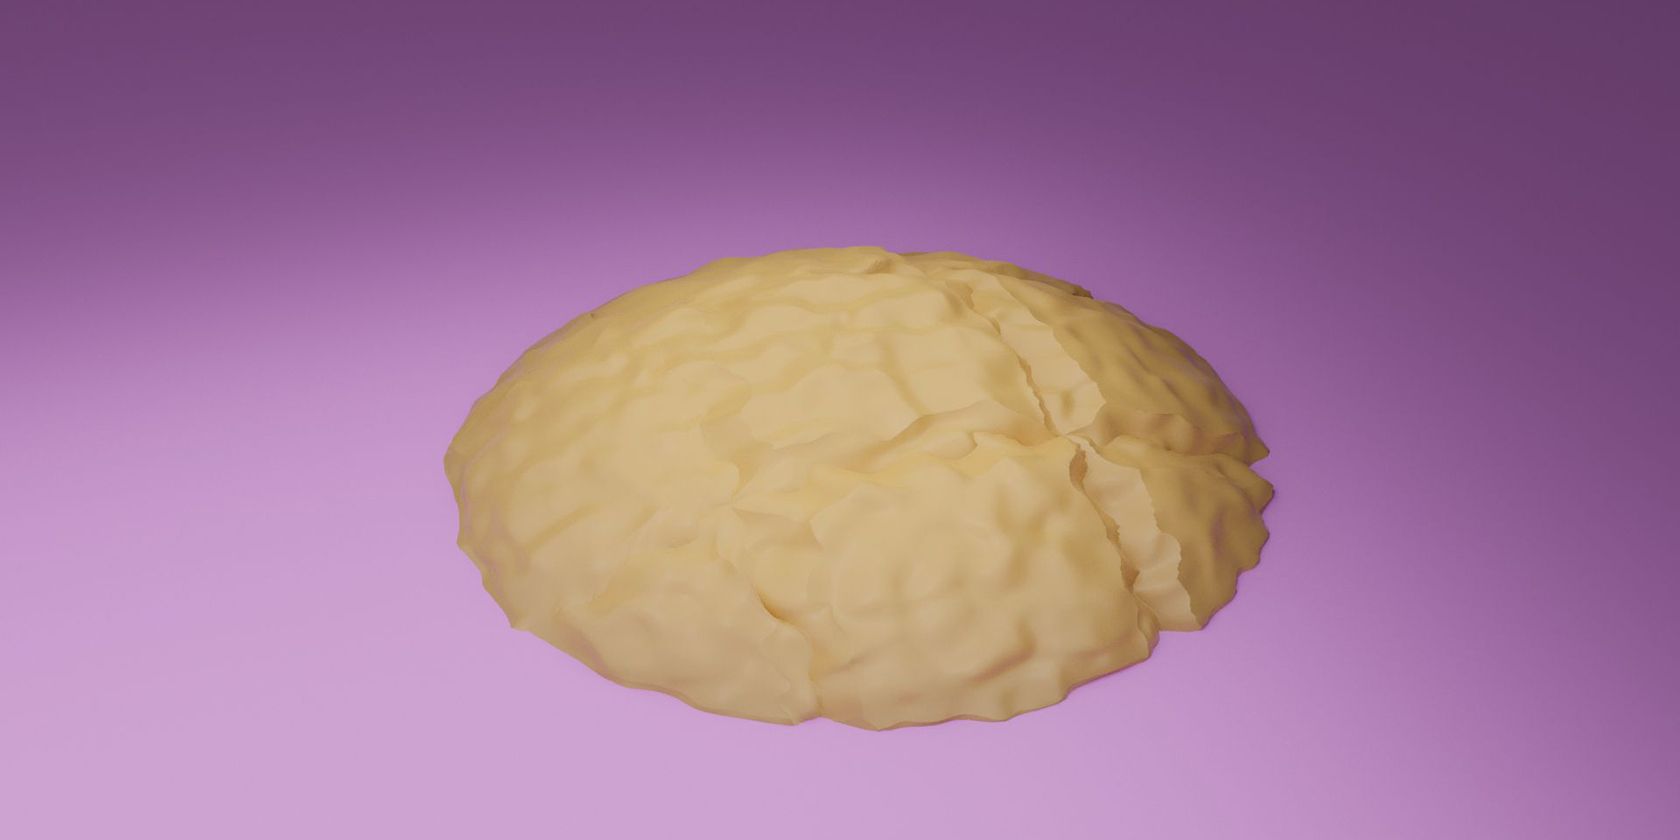 biscuit-model-blender-procedural-texture-example-guide-image